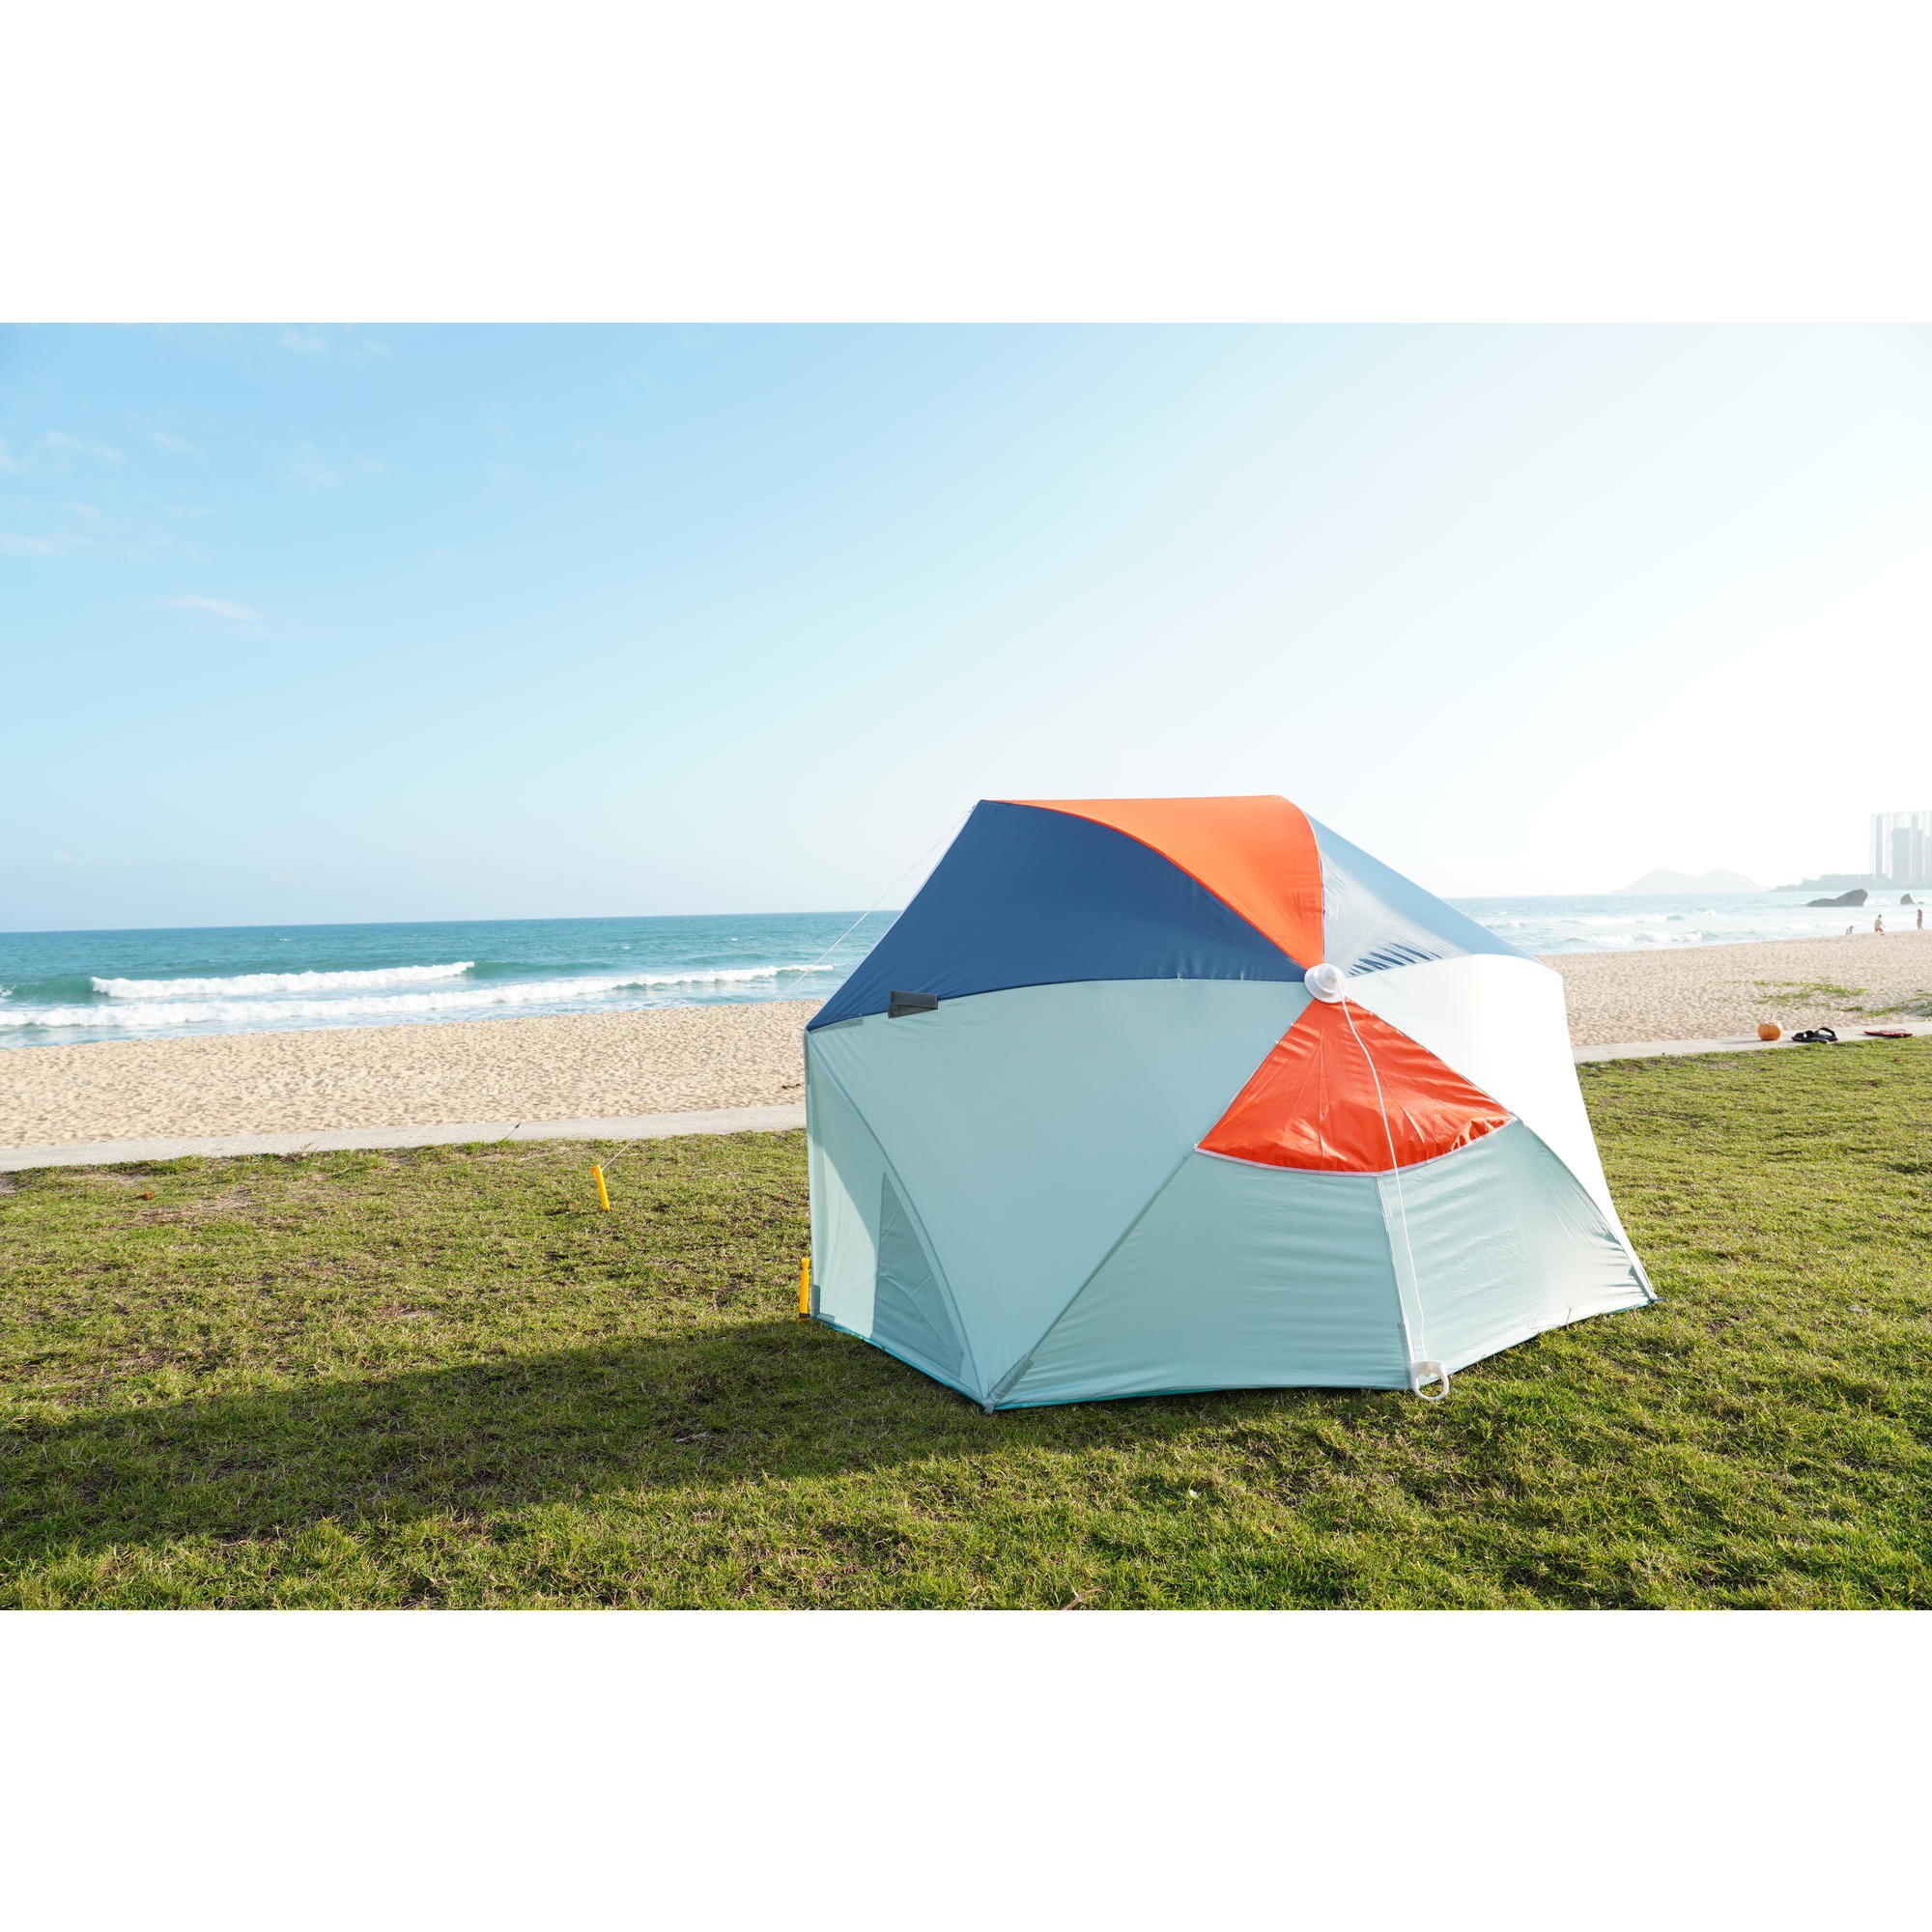 decathlon beach tent